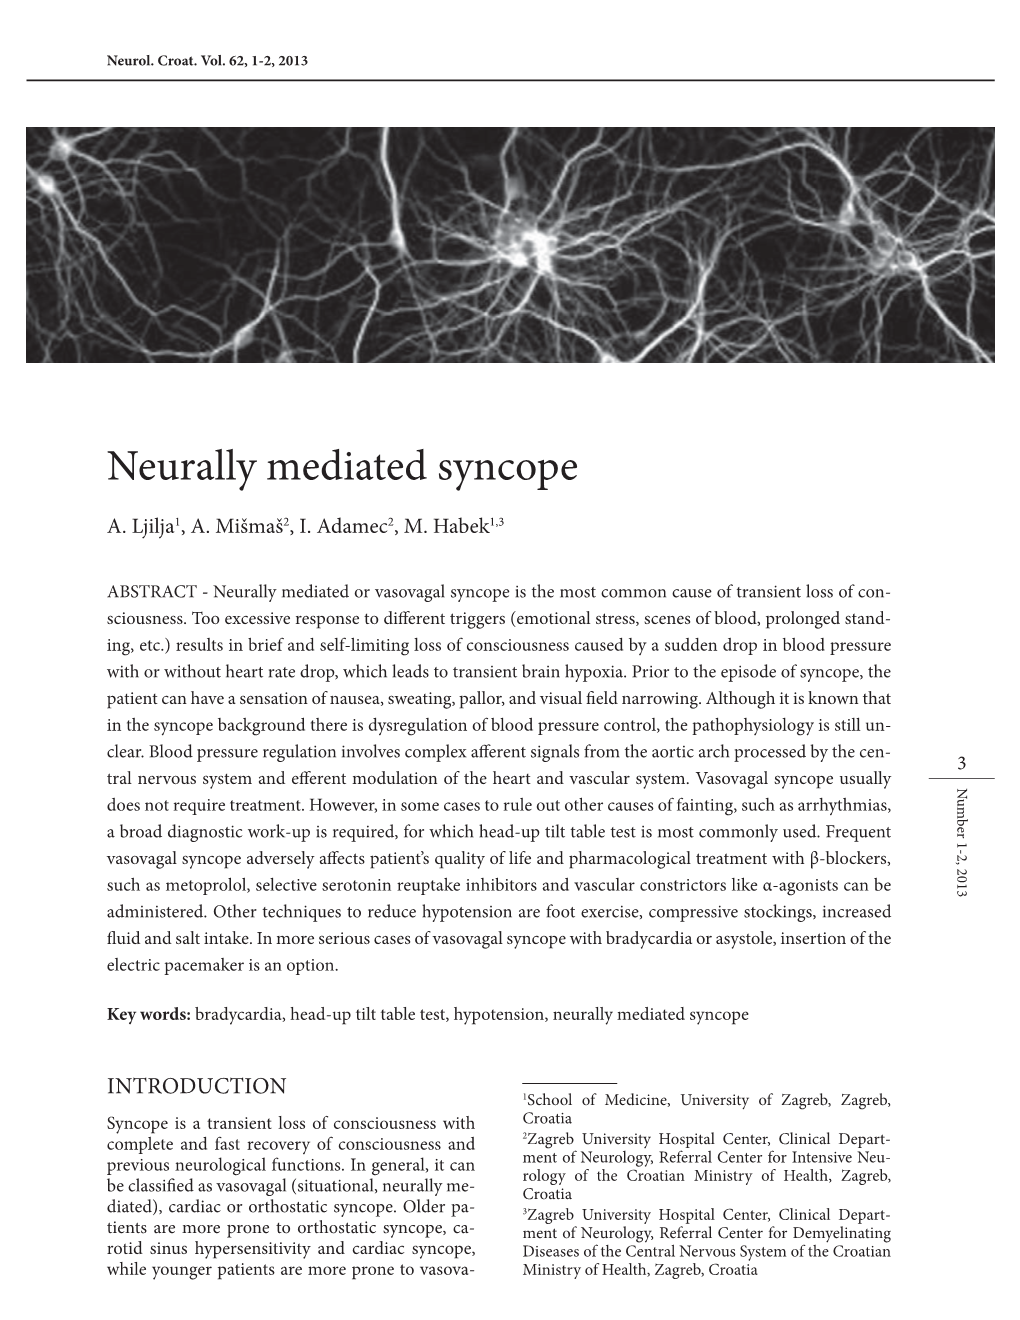 Neurally Mediated Syncope